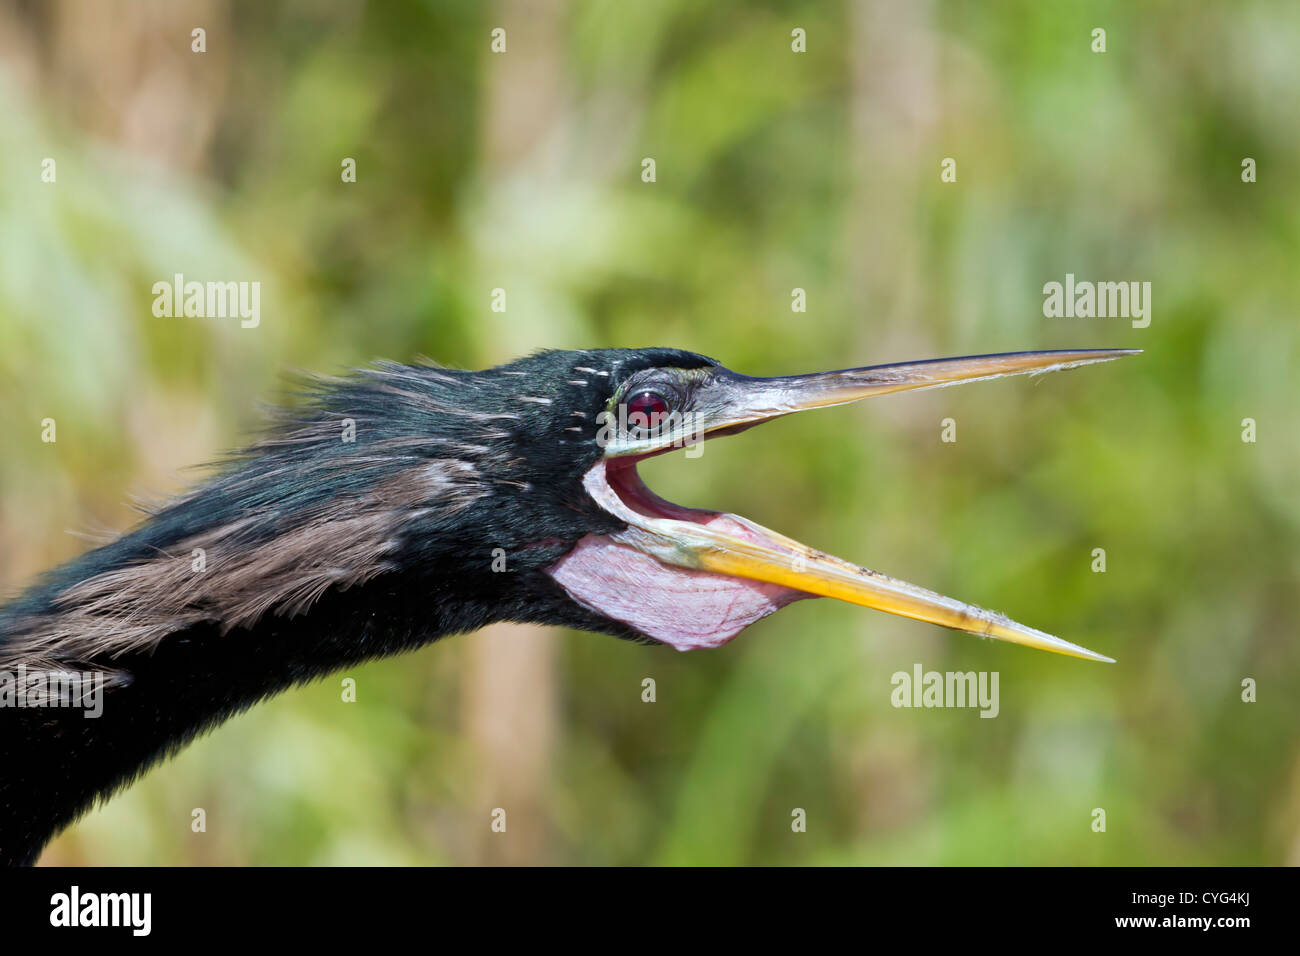 anhinga (Anhinga anhinga) close-up of adult showing head and neck, with beak open, calling, Florida, USA Stock Photo